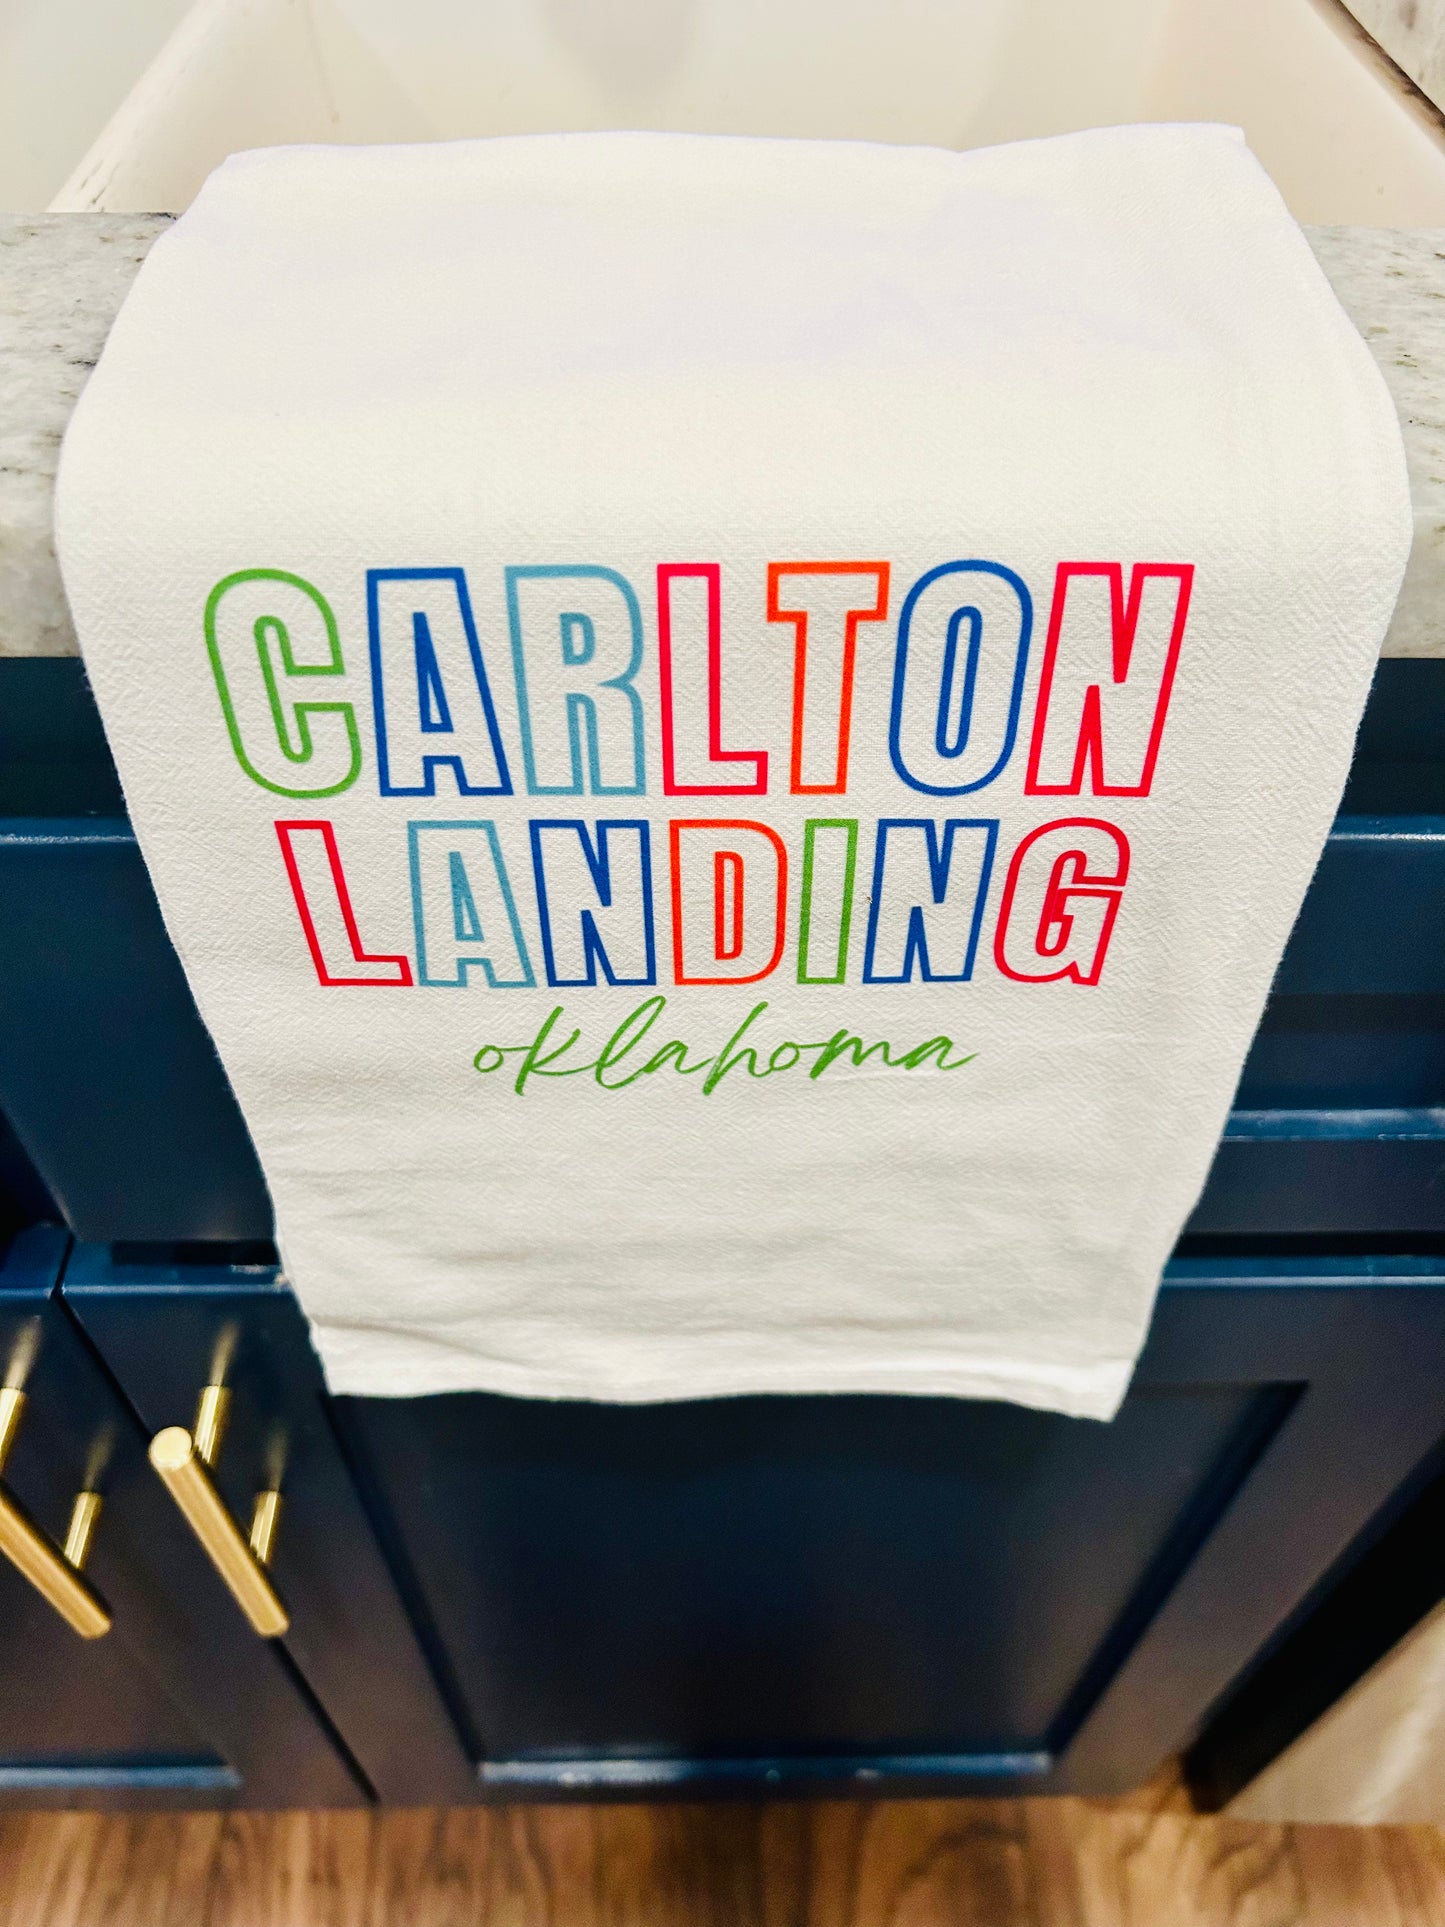 Carlton Landing, Oklahoma Custom Tea Towel